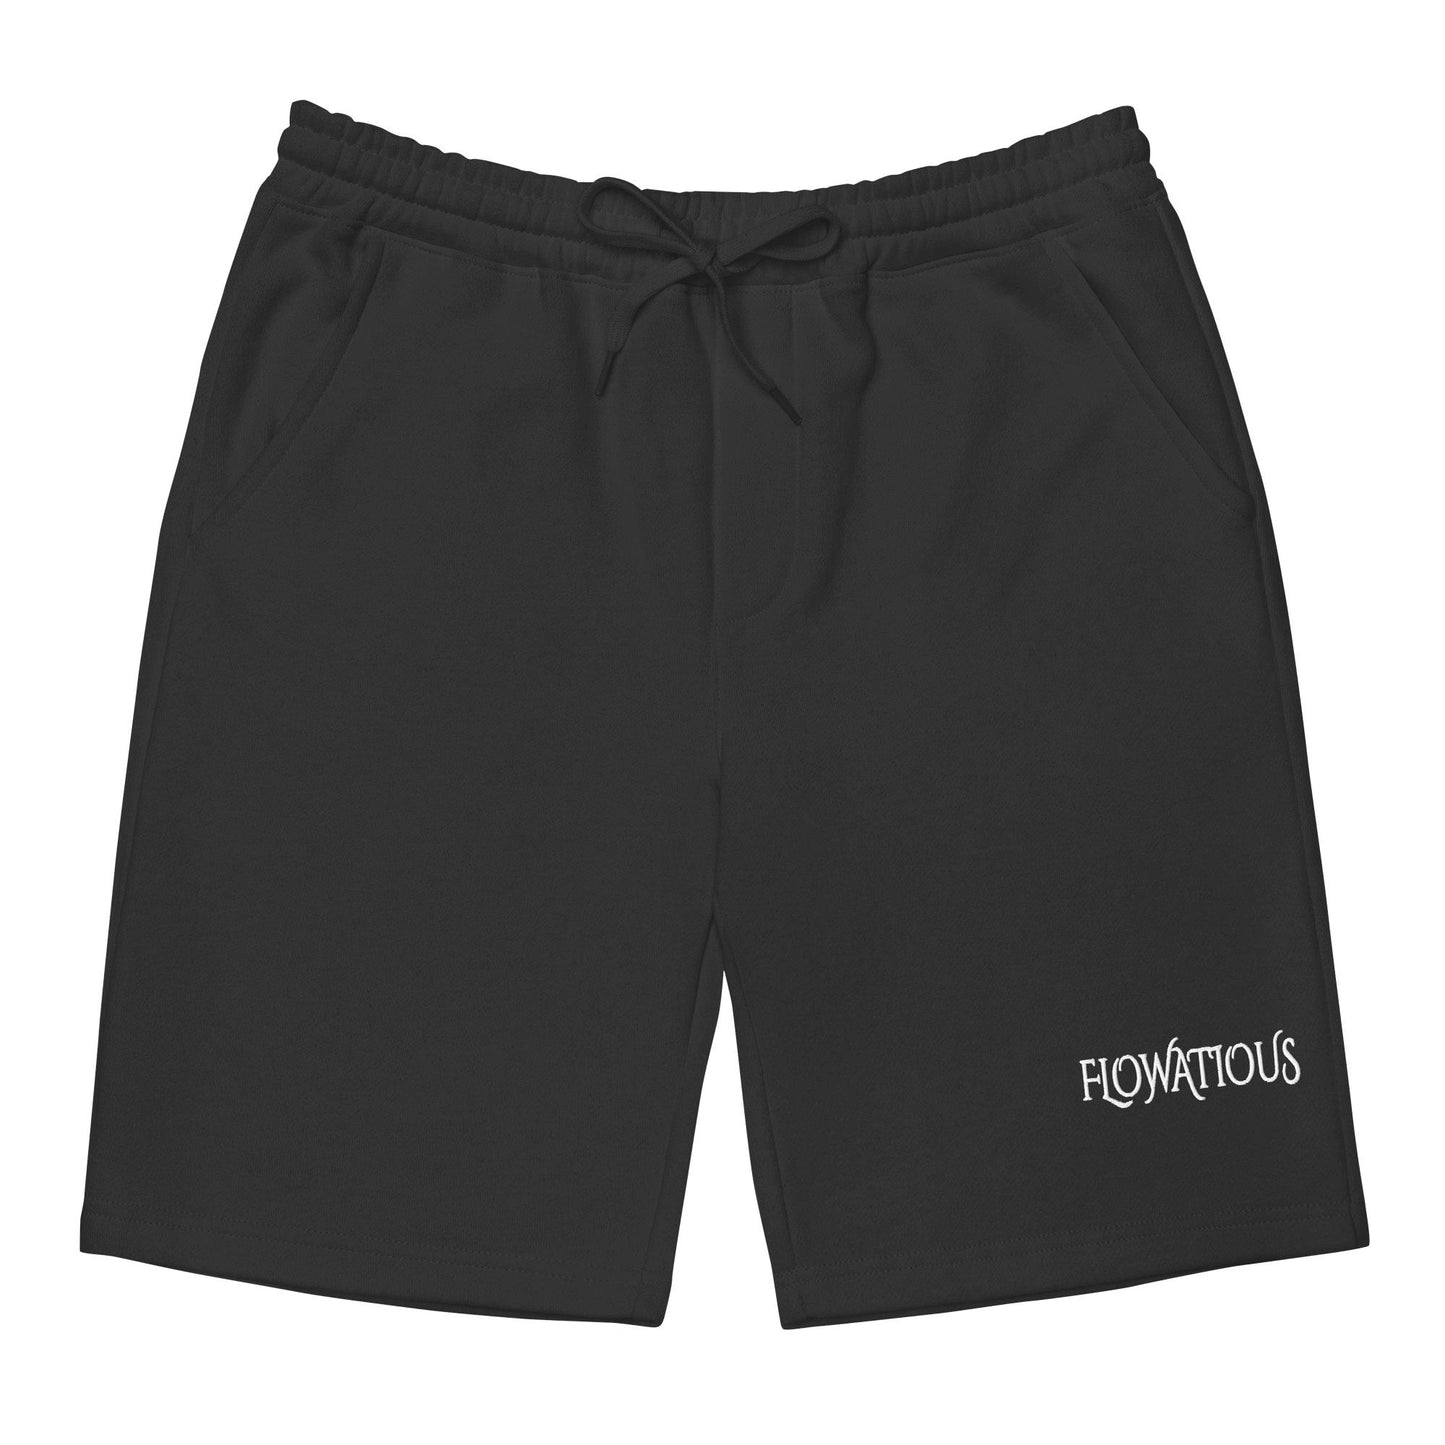 Flowatious™ Men's Black Fleece Shorts